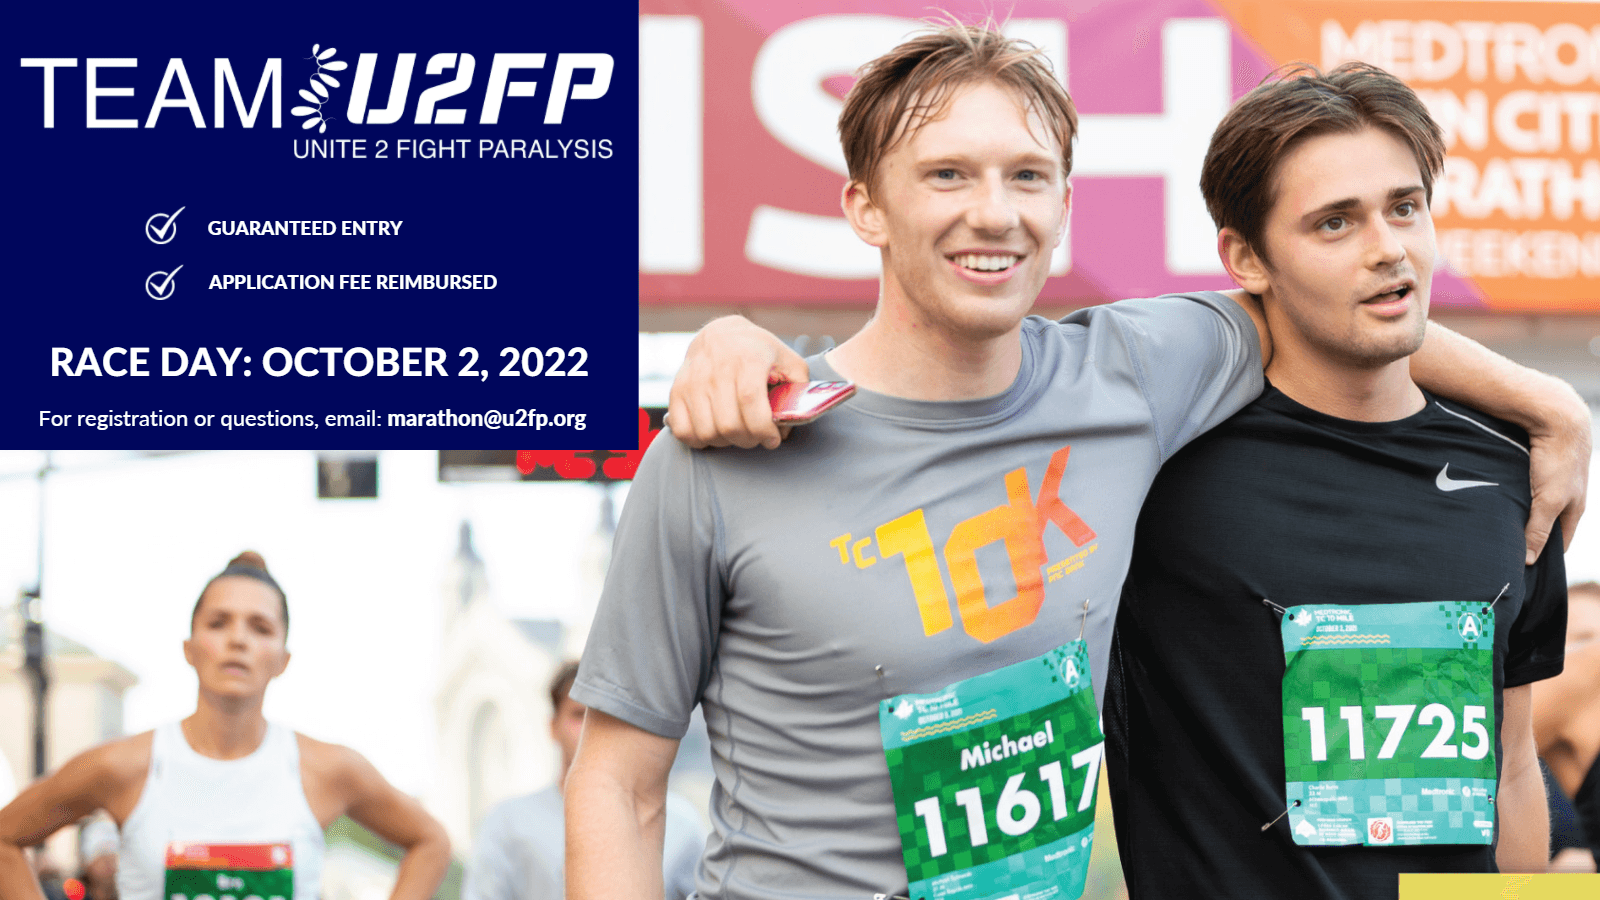 Marathon runner hugging his friend with Team u2FP logo in upper left of image